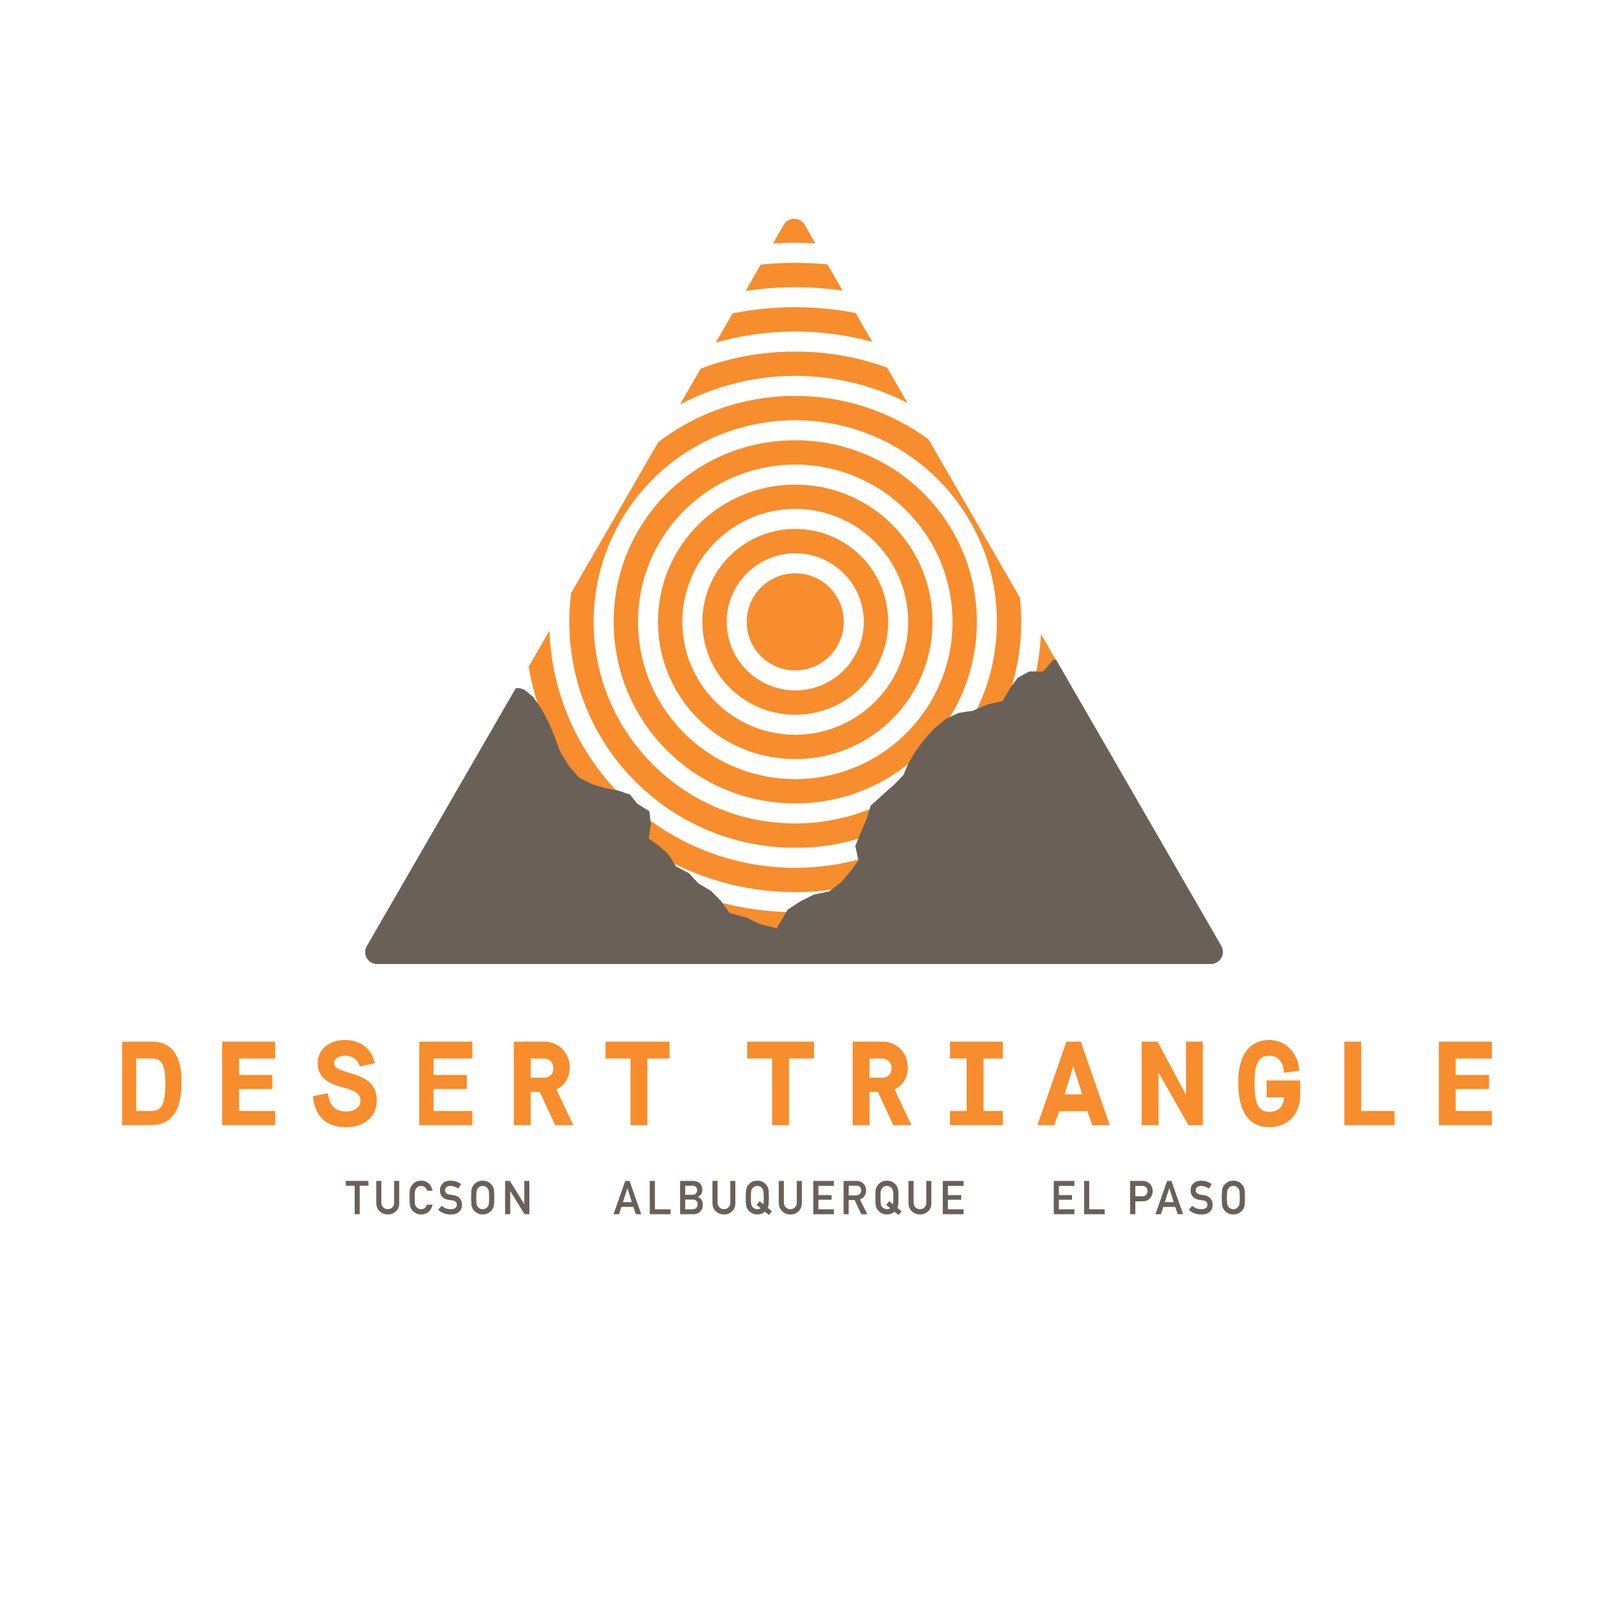 Desert Triangle Print Carpeta